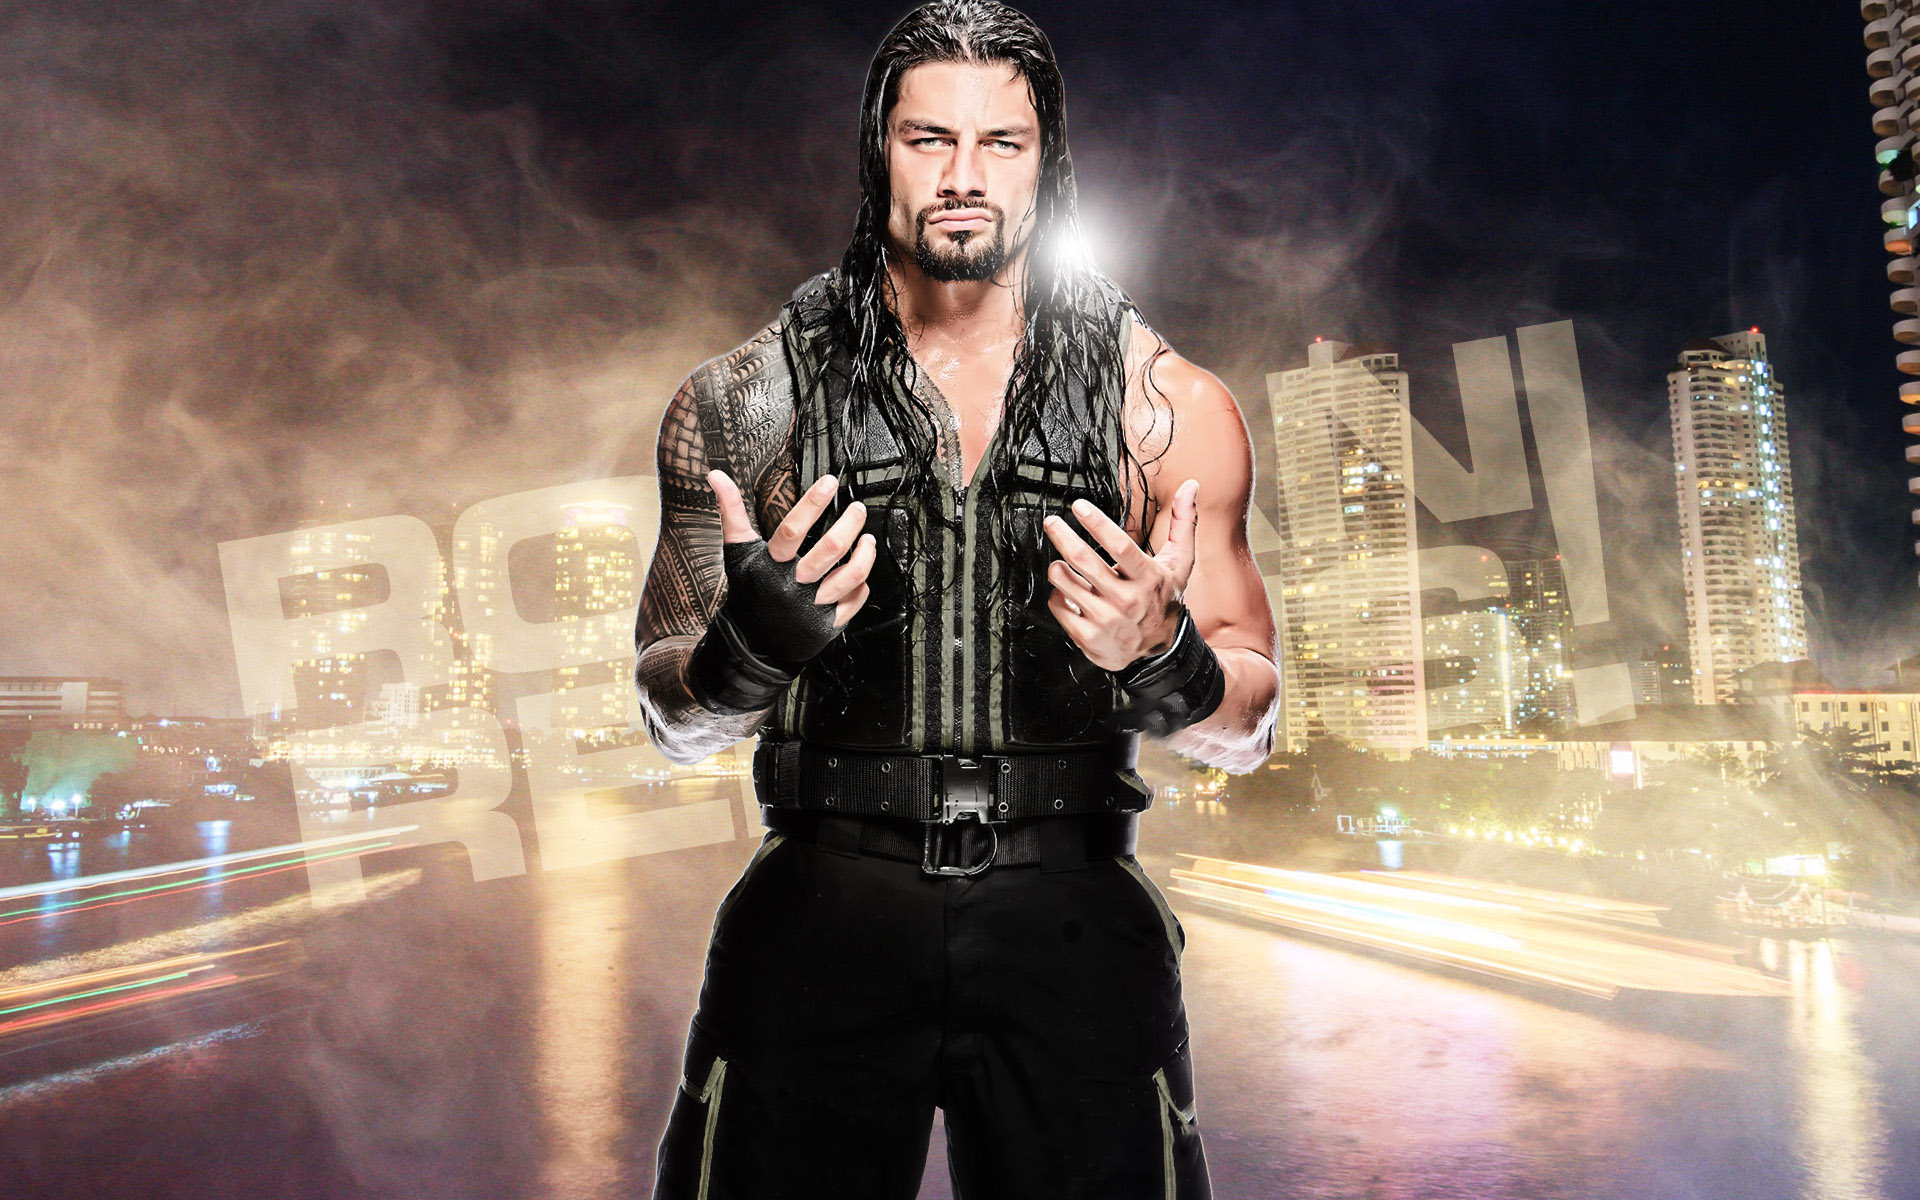 Wwe Wrestler Roman Reigns HD Wallpaper